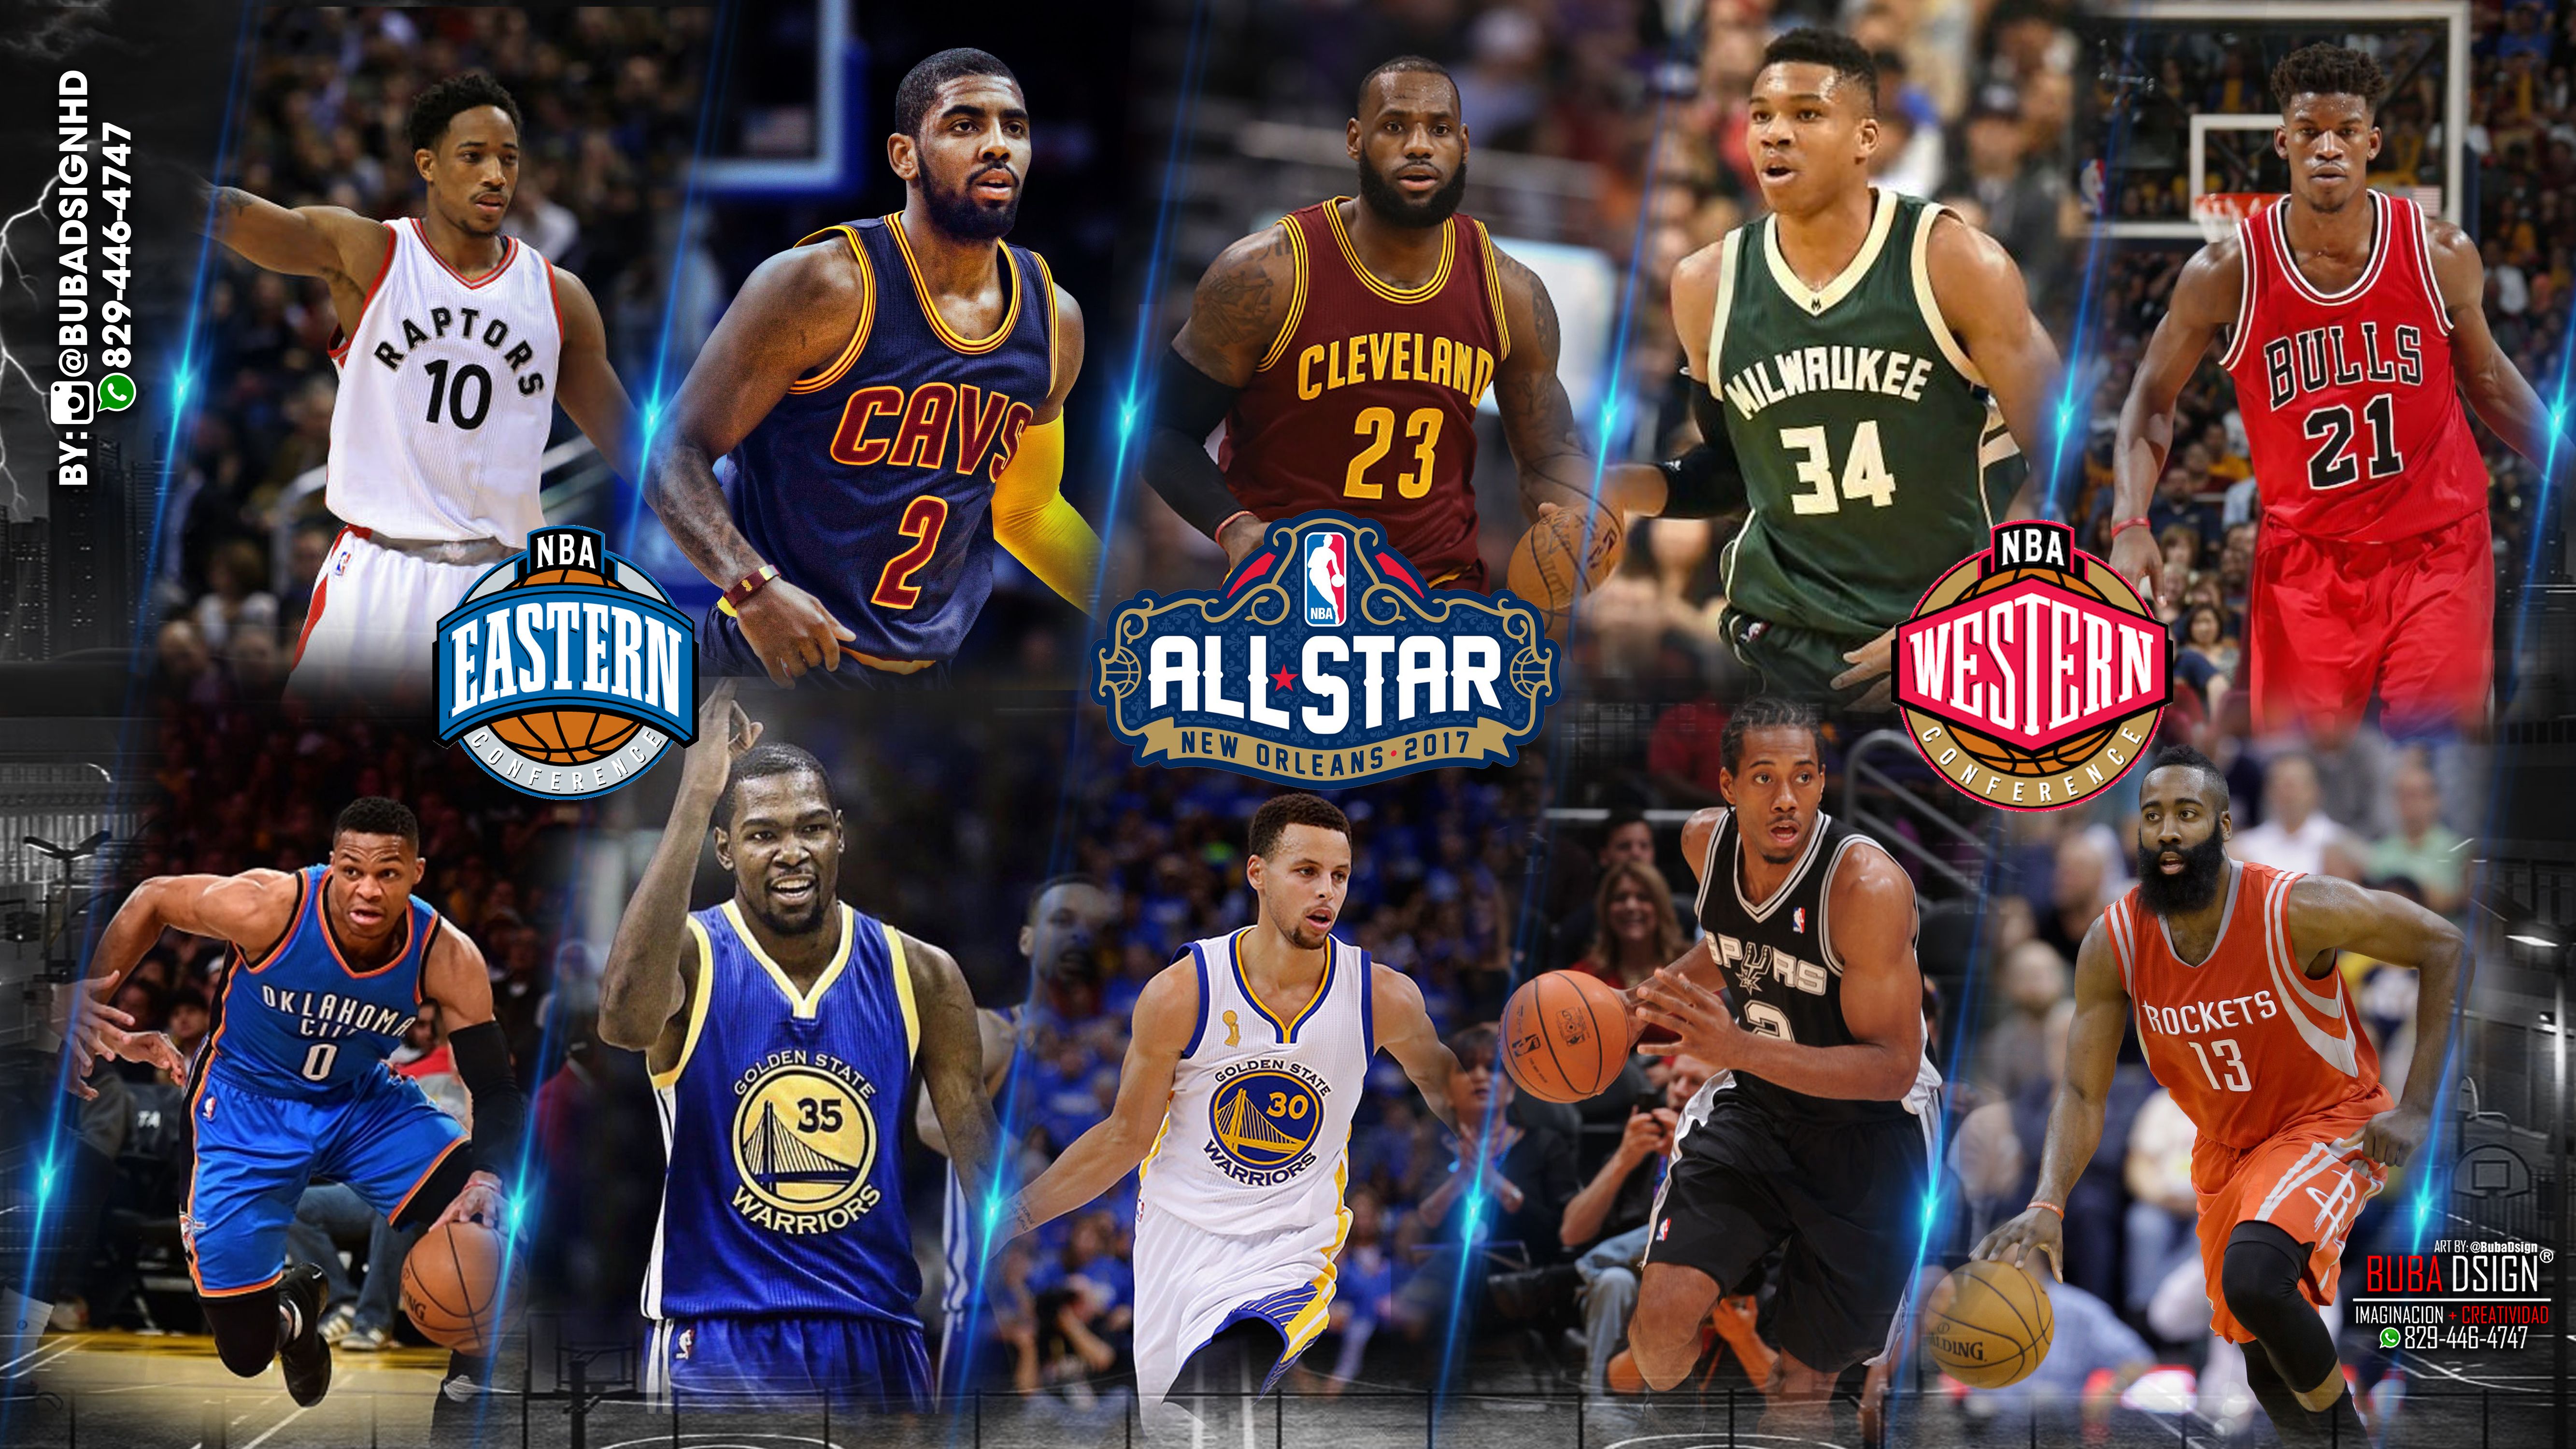 NBA All Star 2018 Wallpaper